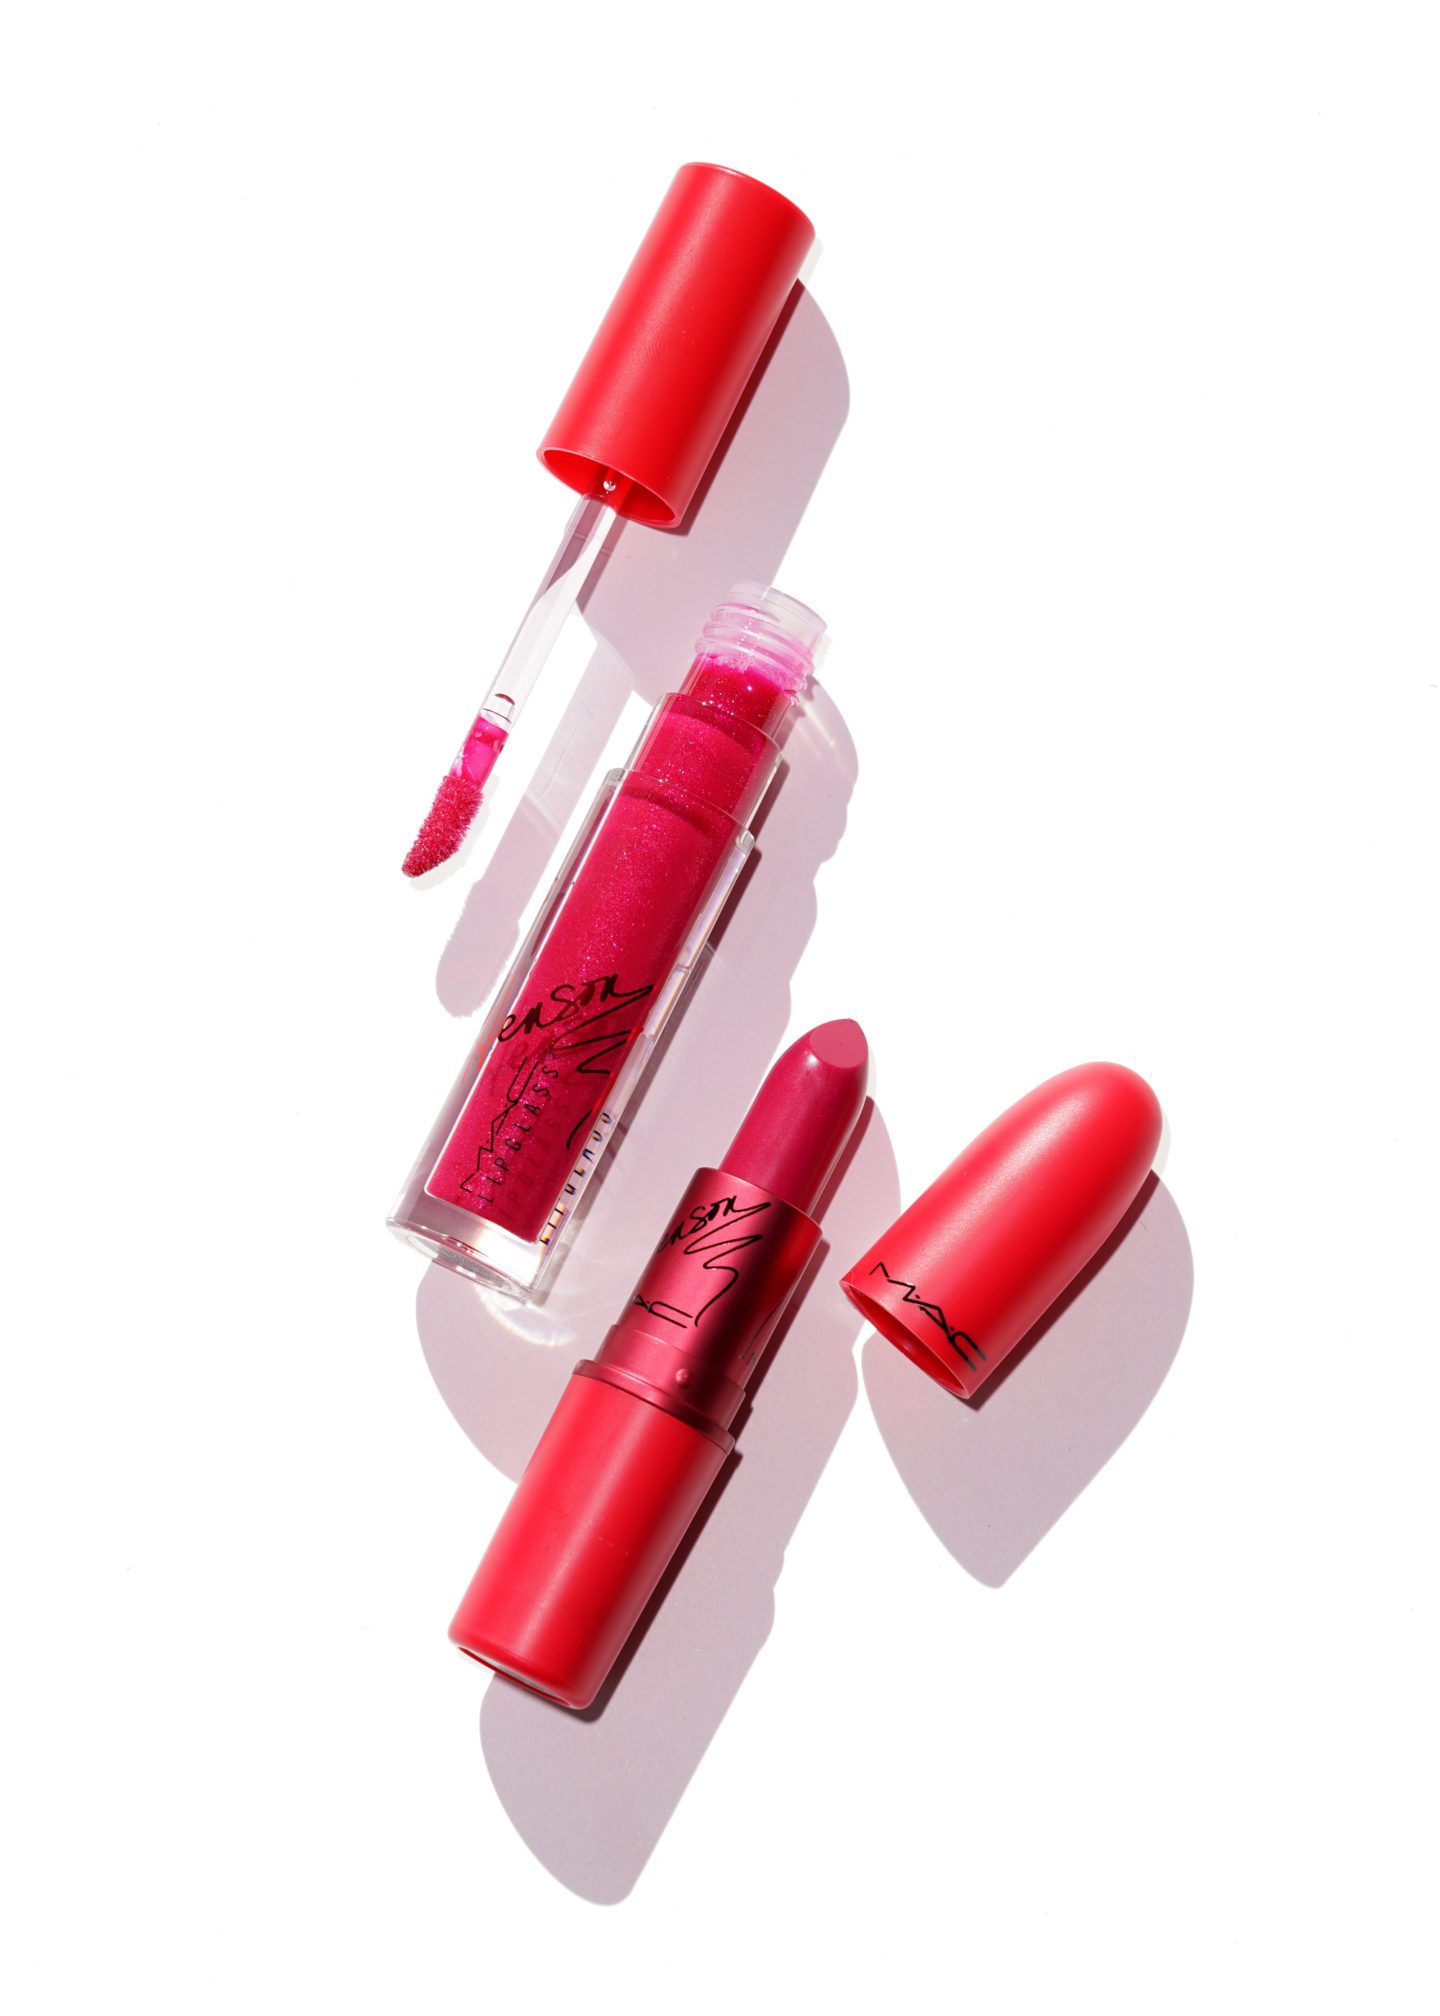 MAC Viva Glam Taraji P Henson Lipglass and Lipstick Review | The Beauty Look Book